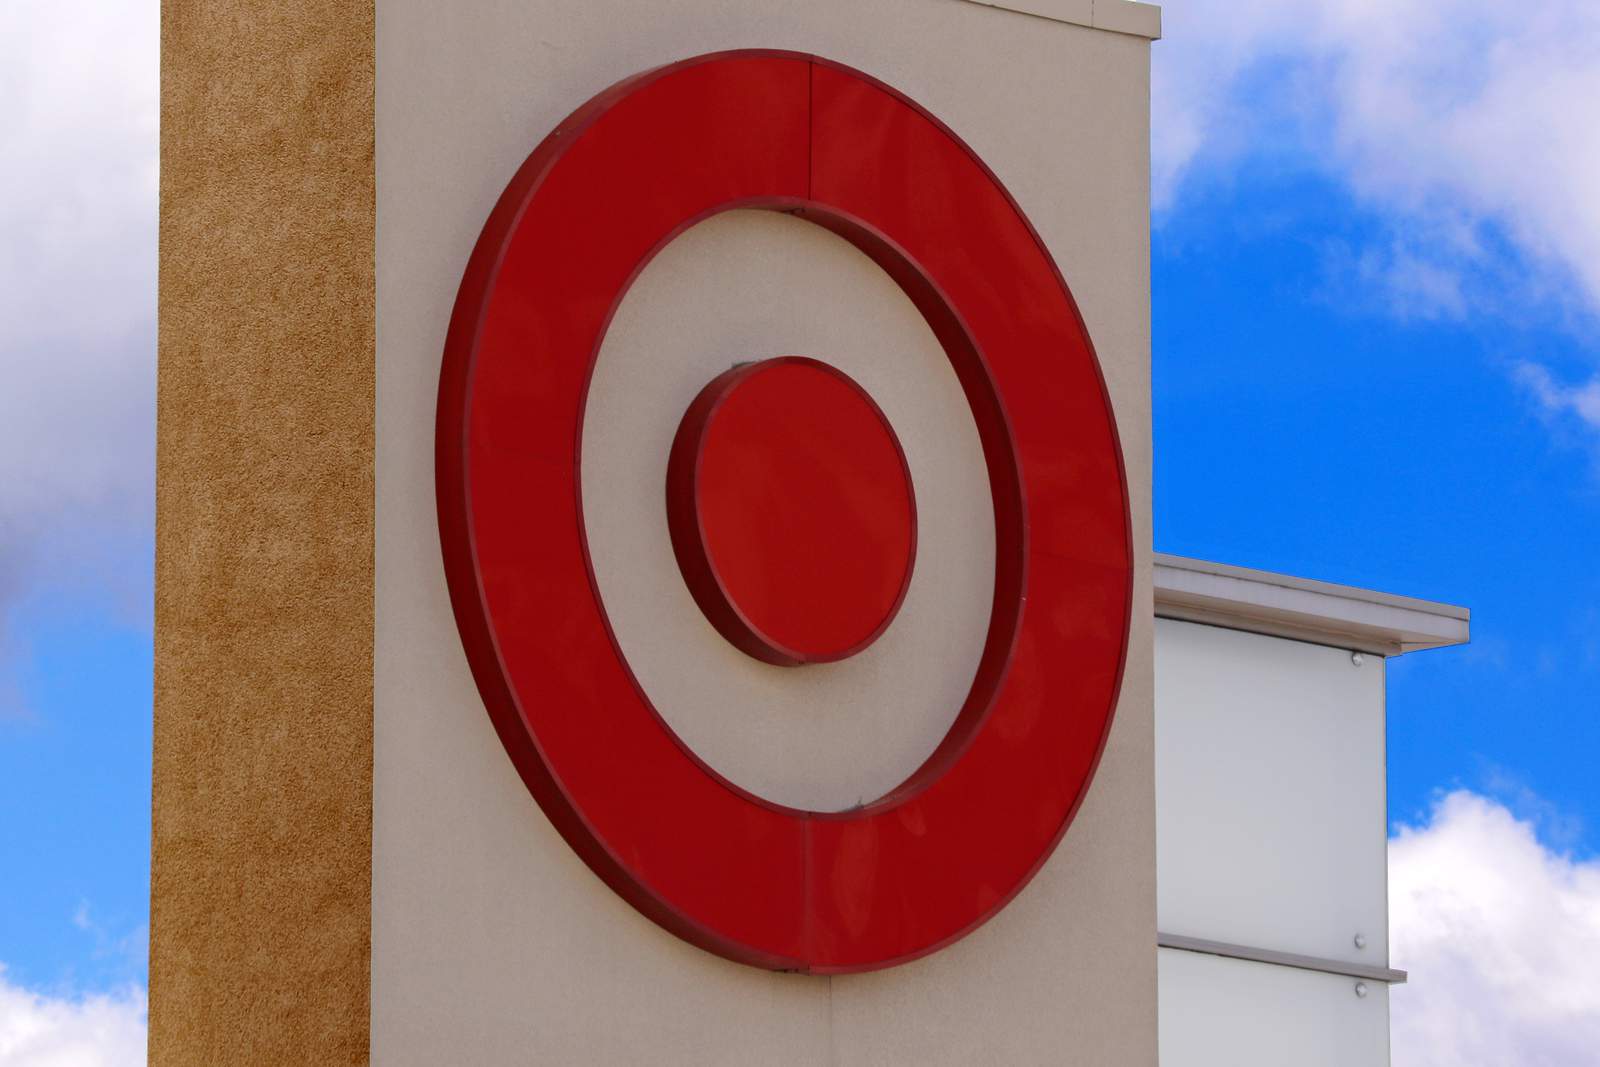 Target sales surge as Americans lean on big box stores